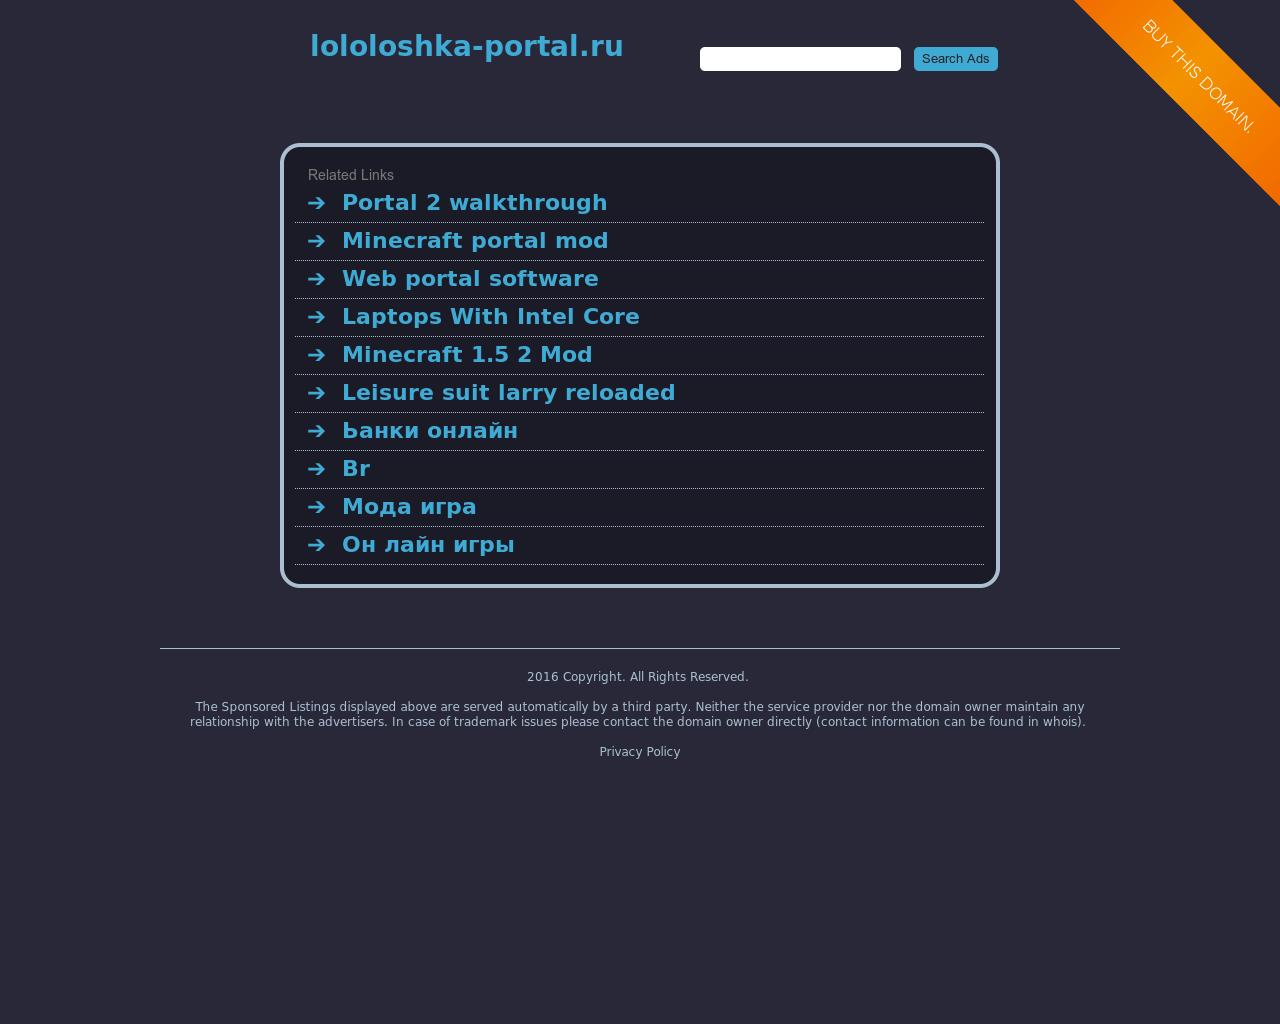 Изображение сайта lololoshka-portal.ru в разрешении 1280x1024